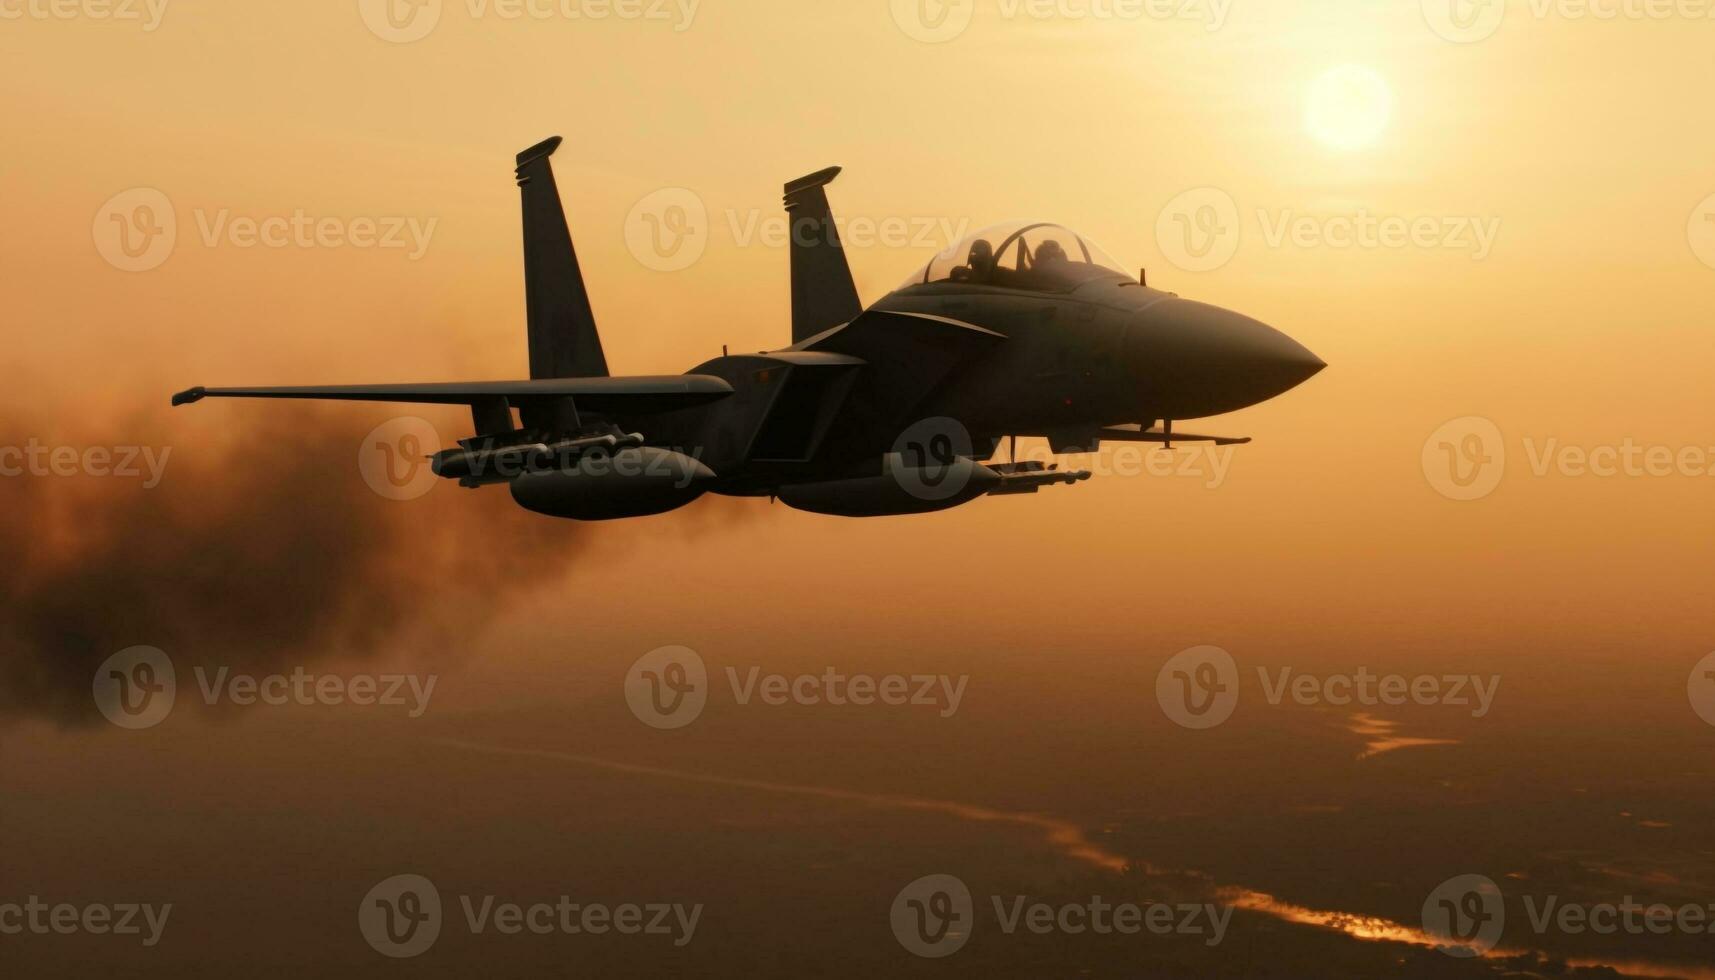 Militär- Flugzeug nehmen aus beim Dämmerung, Silhouette gegen das Sonnenuntergang Himmel generiert durch ai foto